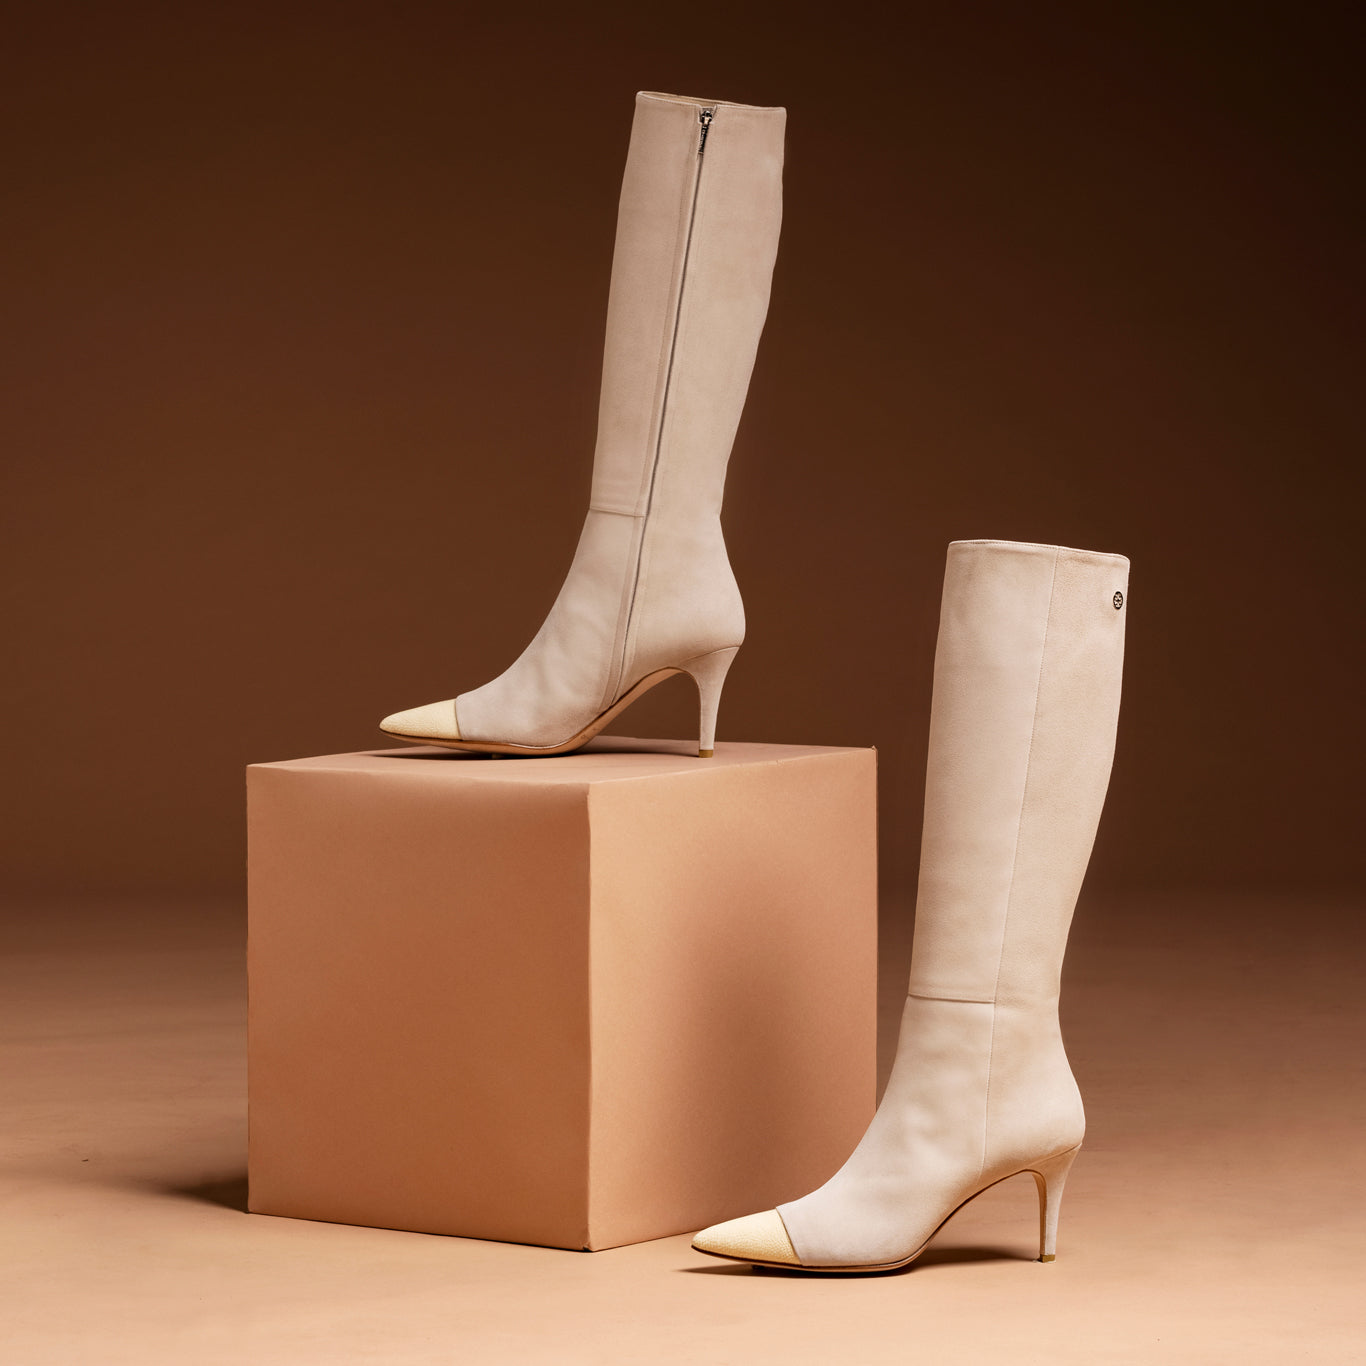 [women's] DAWN - combination knee-high boots